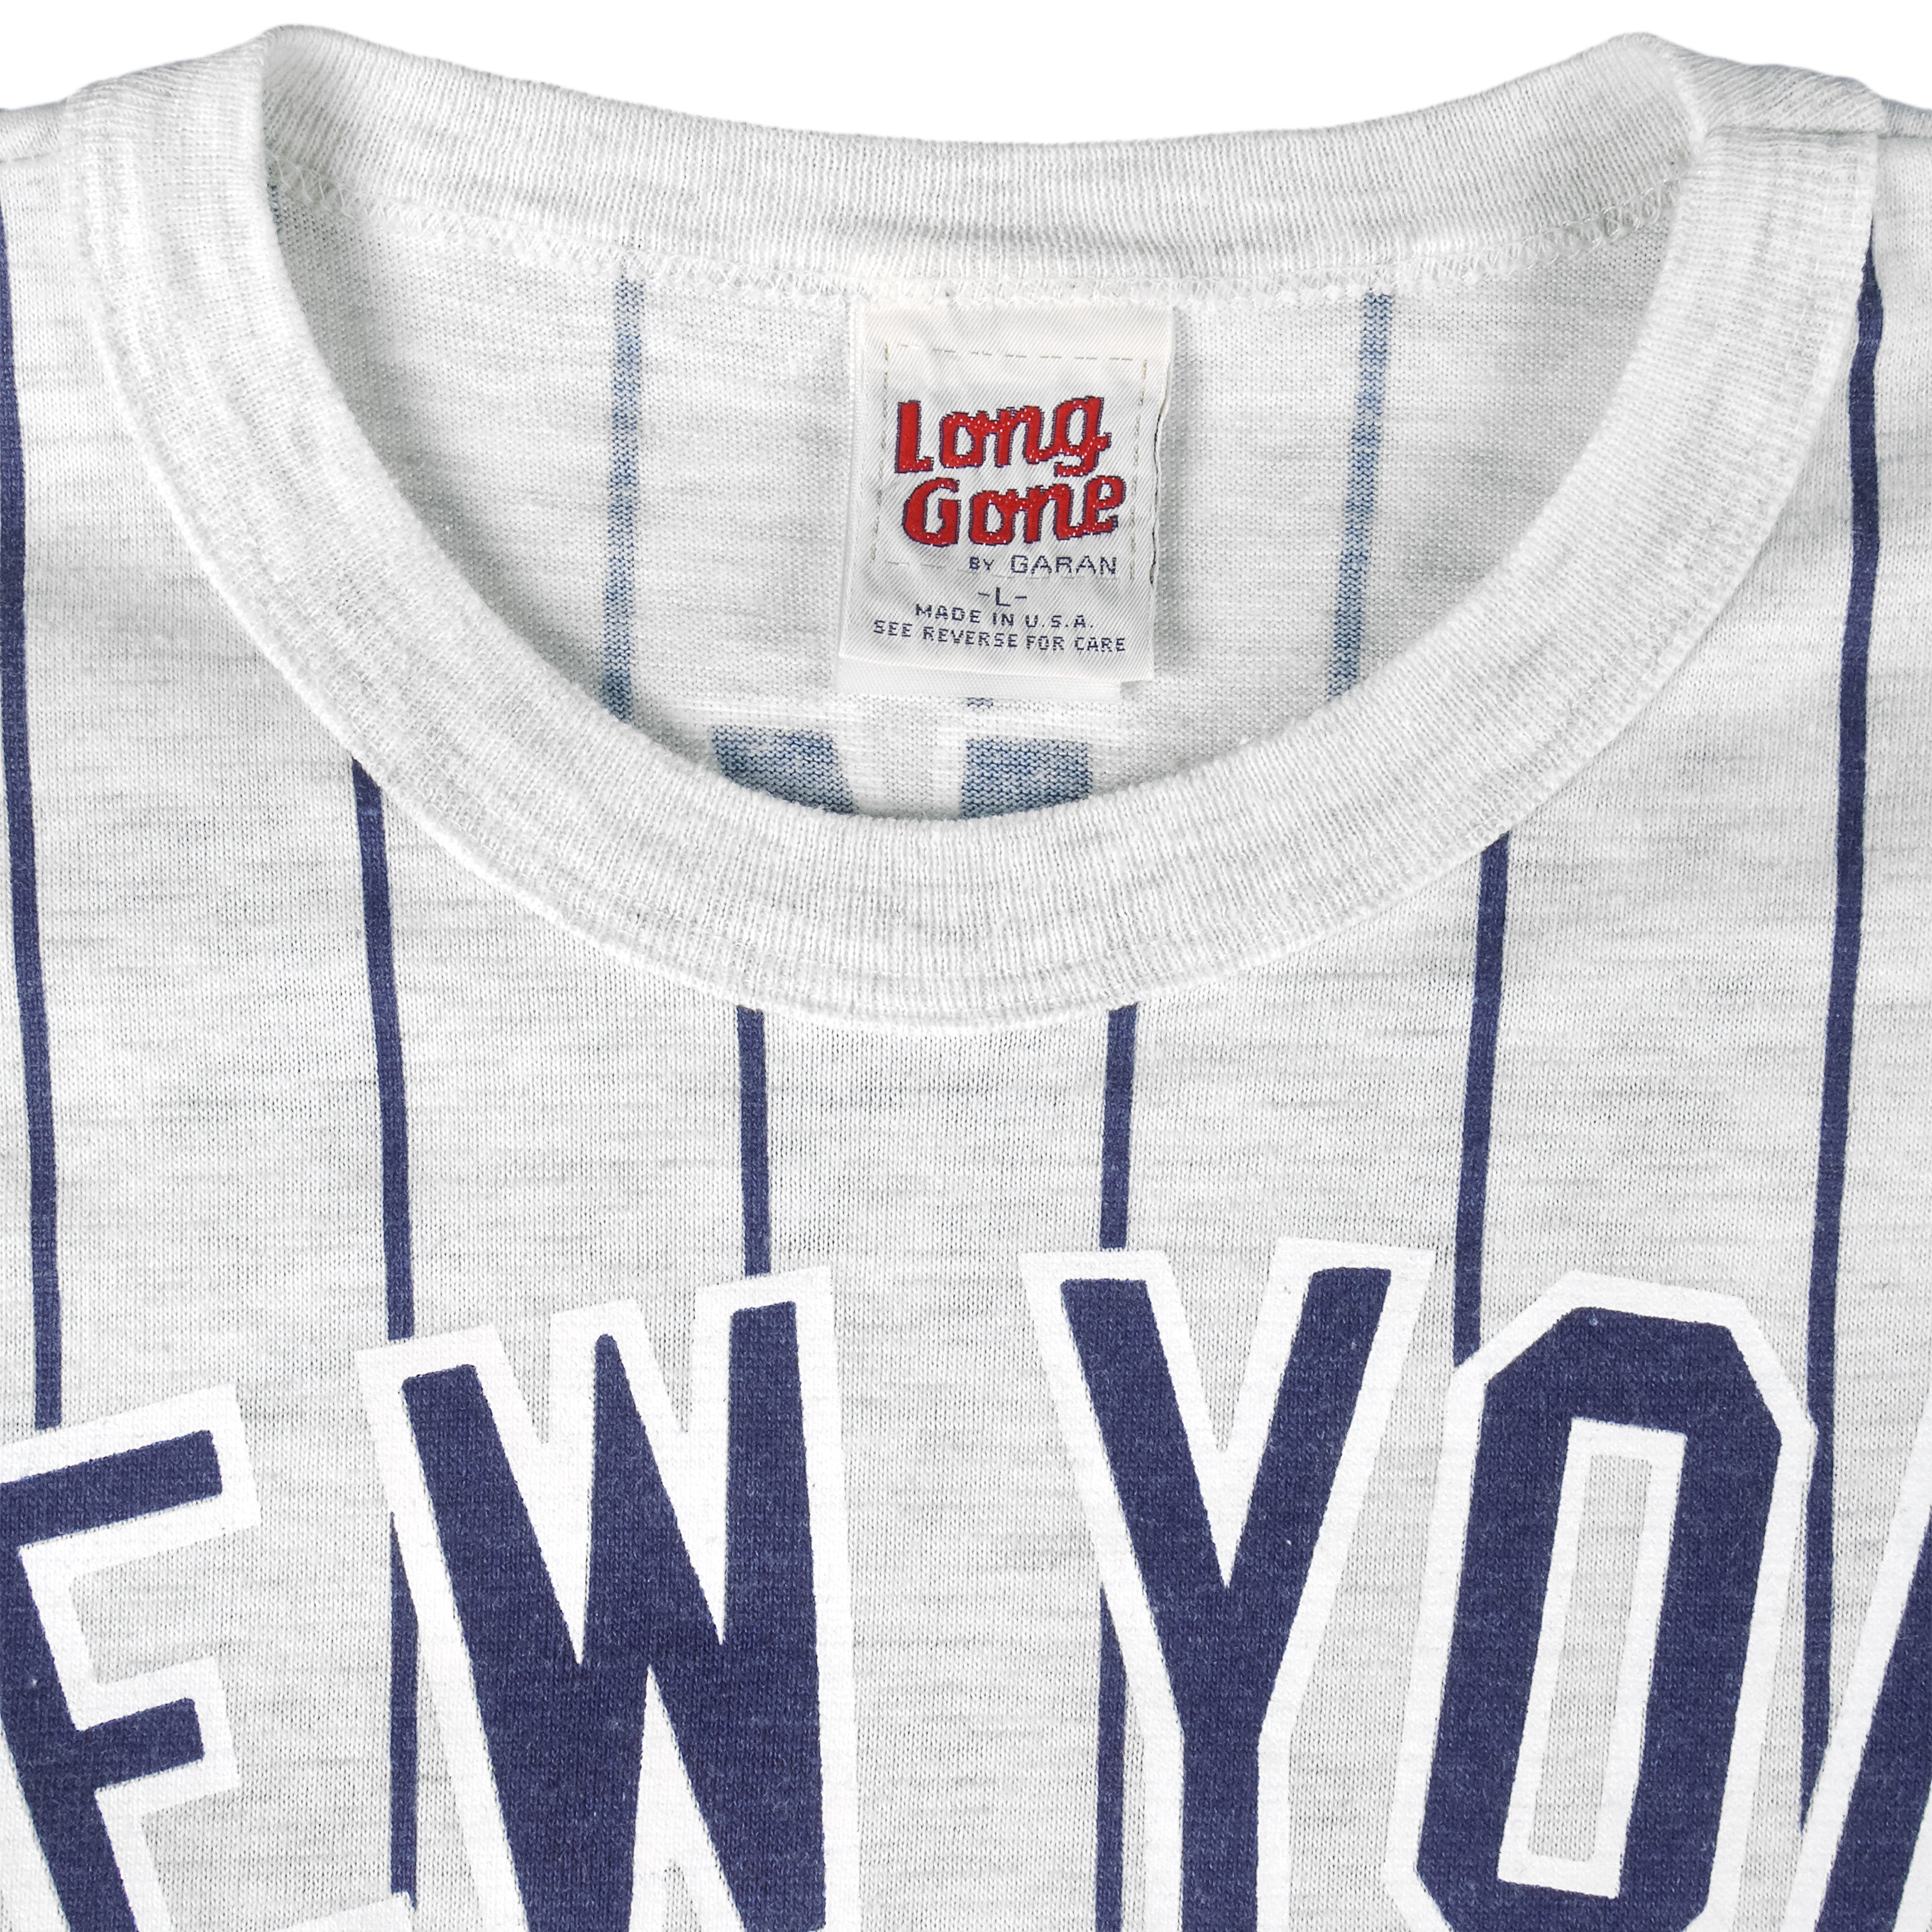 Vintage Dynasty New York Yankees Polo Shirt Size Large